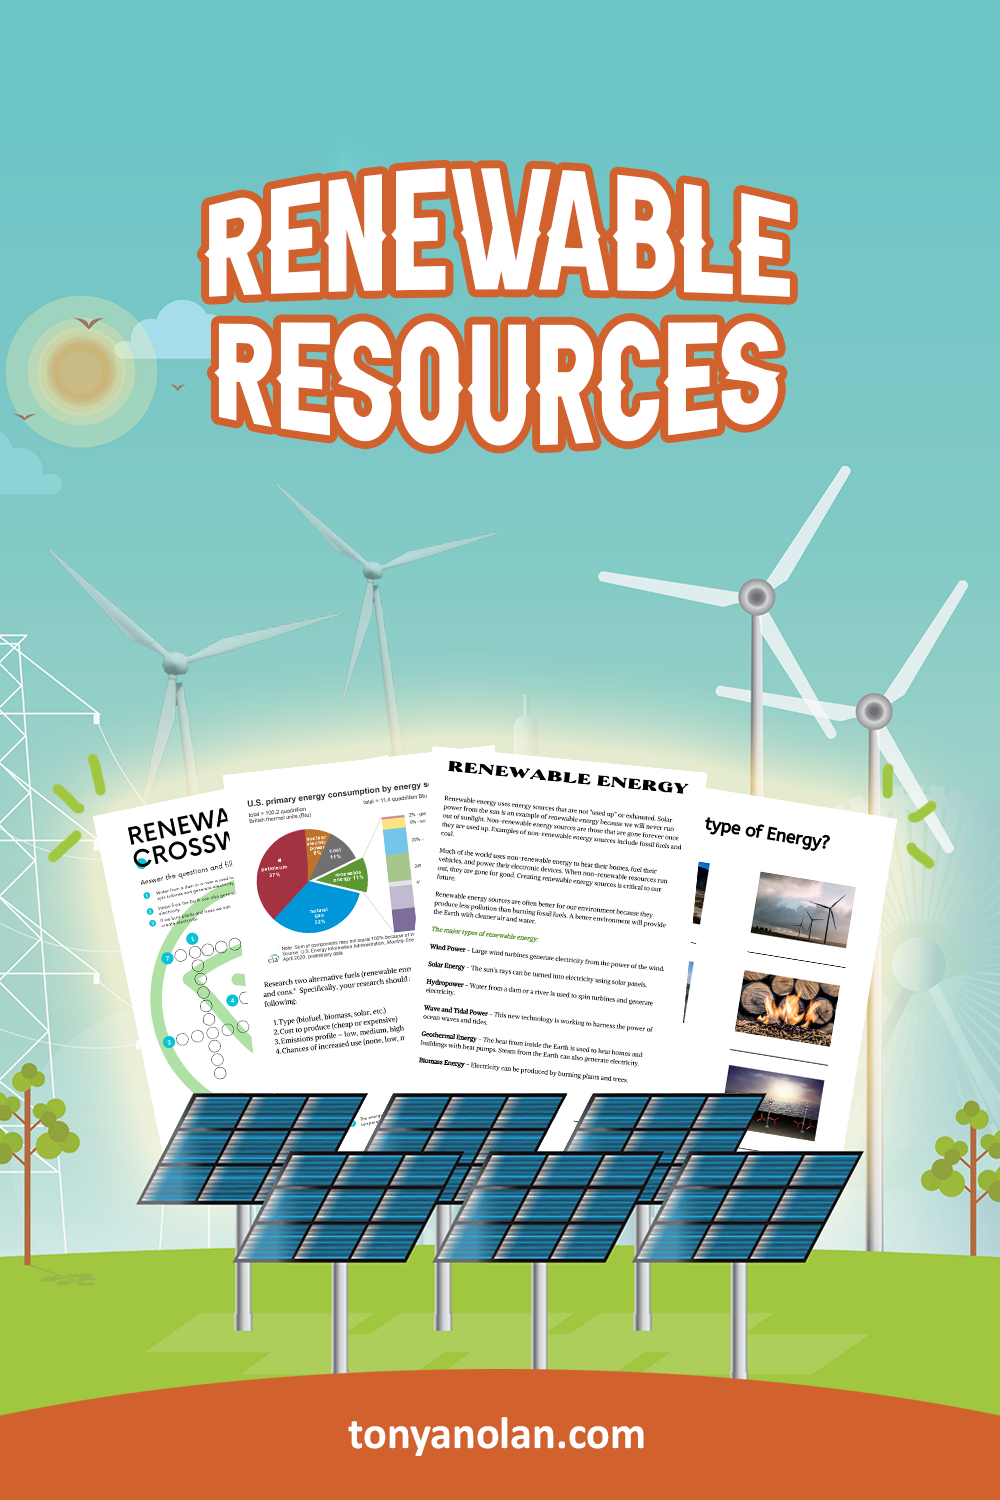 Renewable Energy: Definition & Types